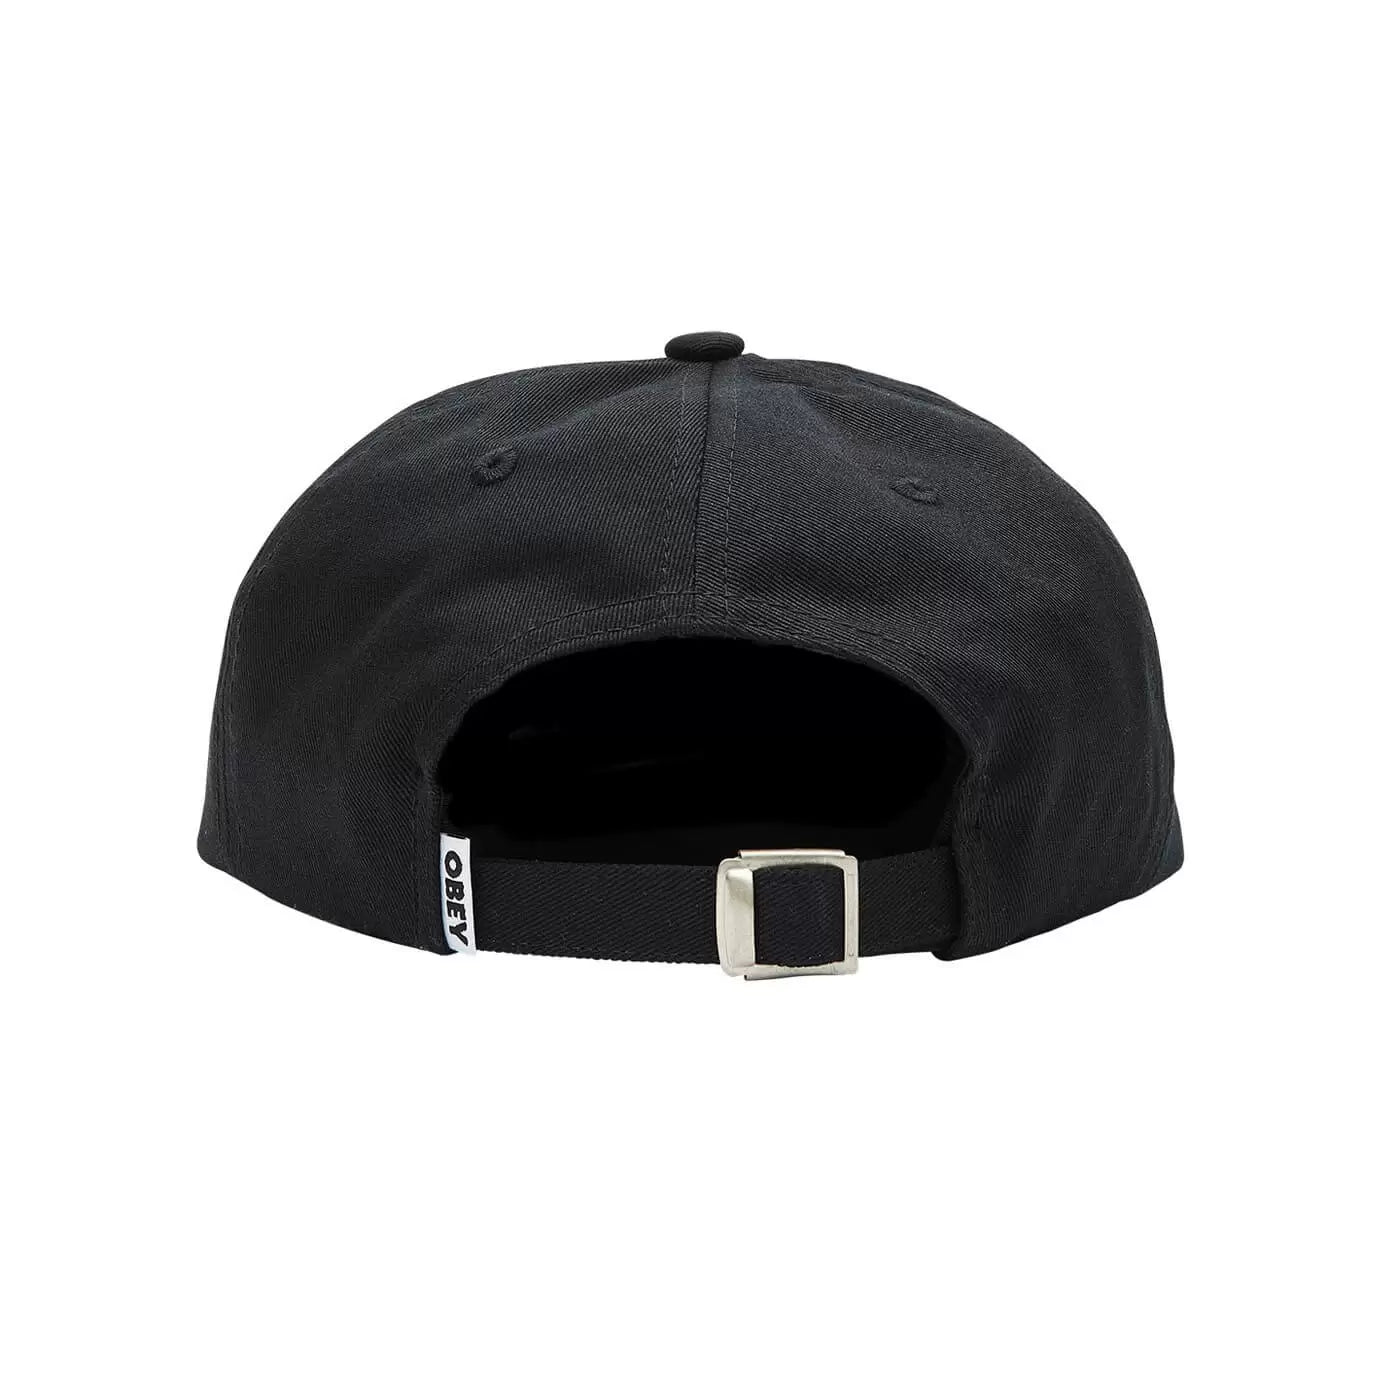 OBEY BOLD TWILL 6 PANEL CLASSIC CAP - Black